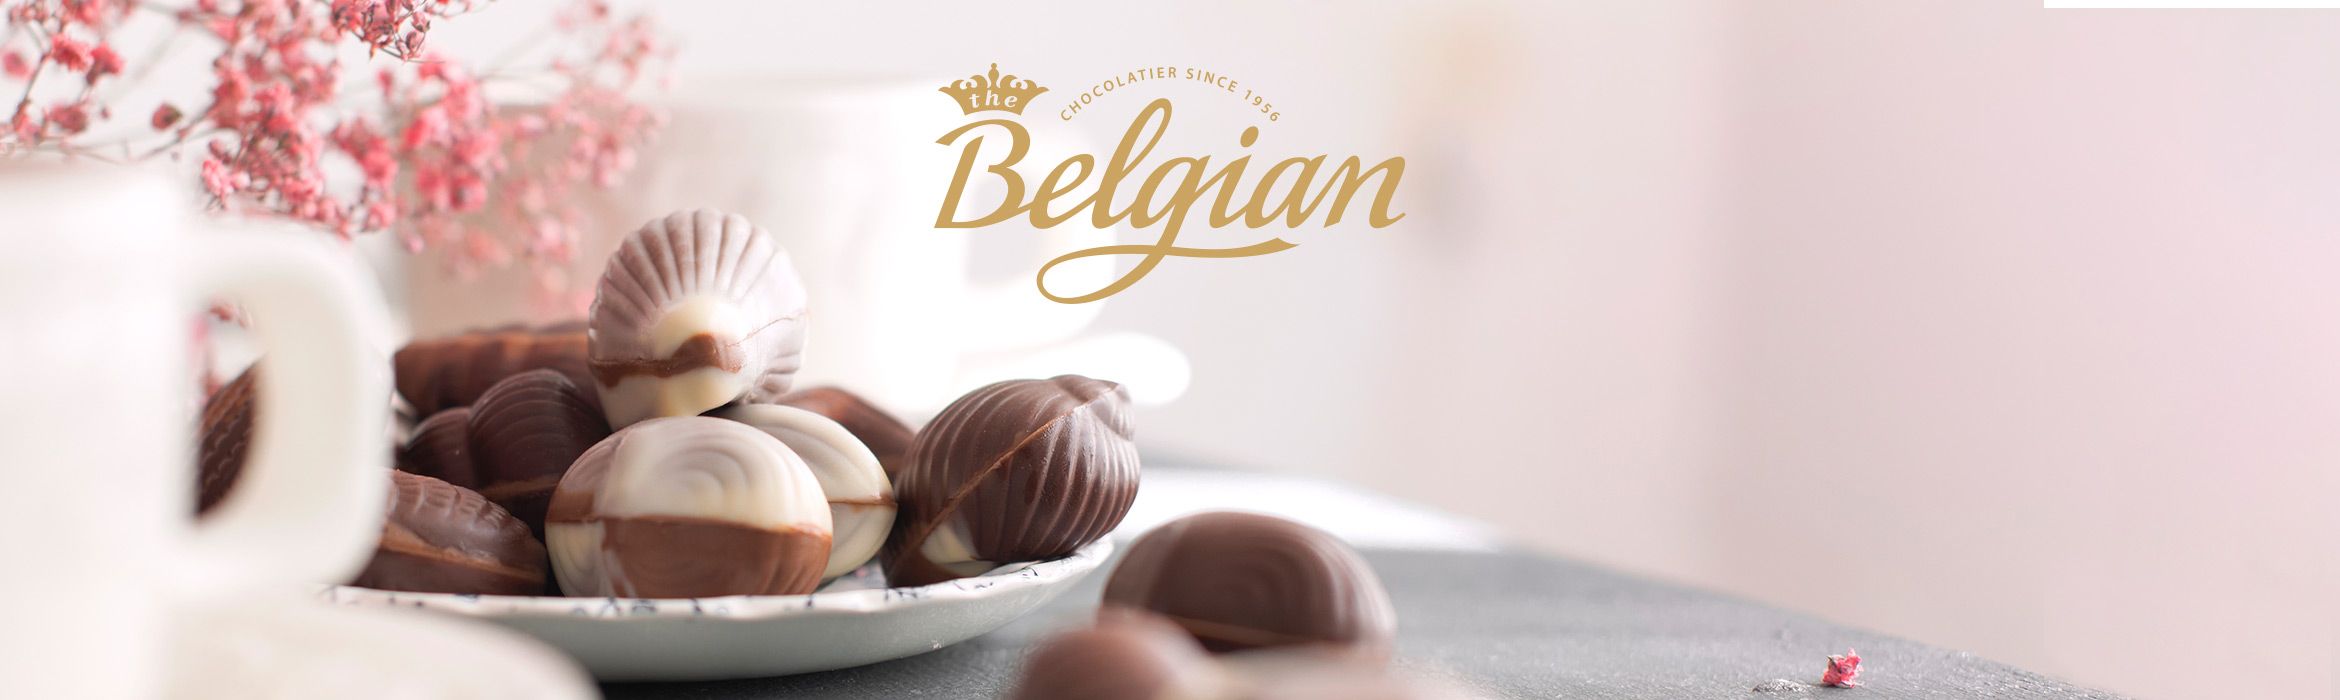 THE BELGIAN Schokolade